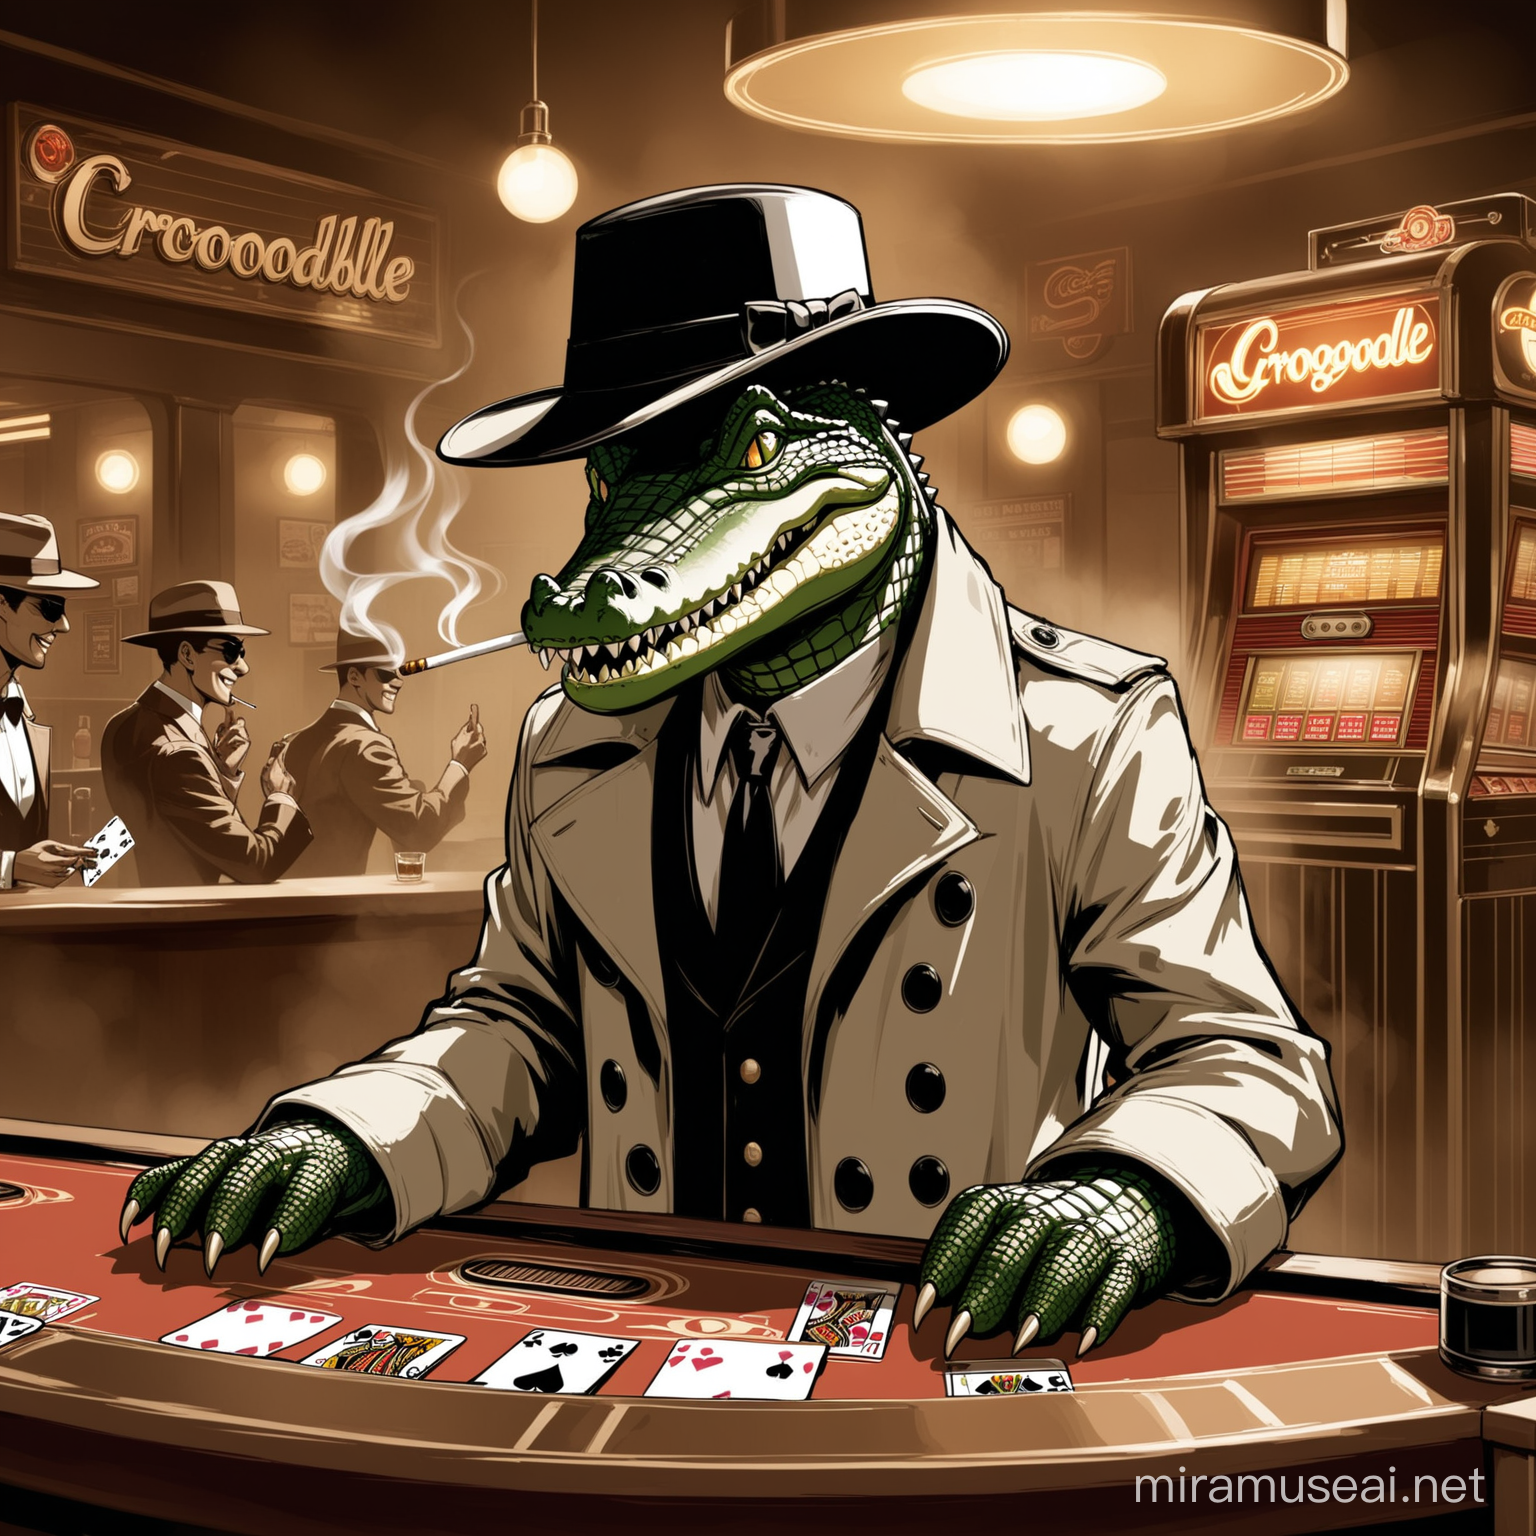 Sleek Crocodile Gangster Playing Cards in a Noir Setting